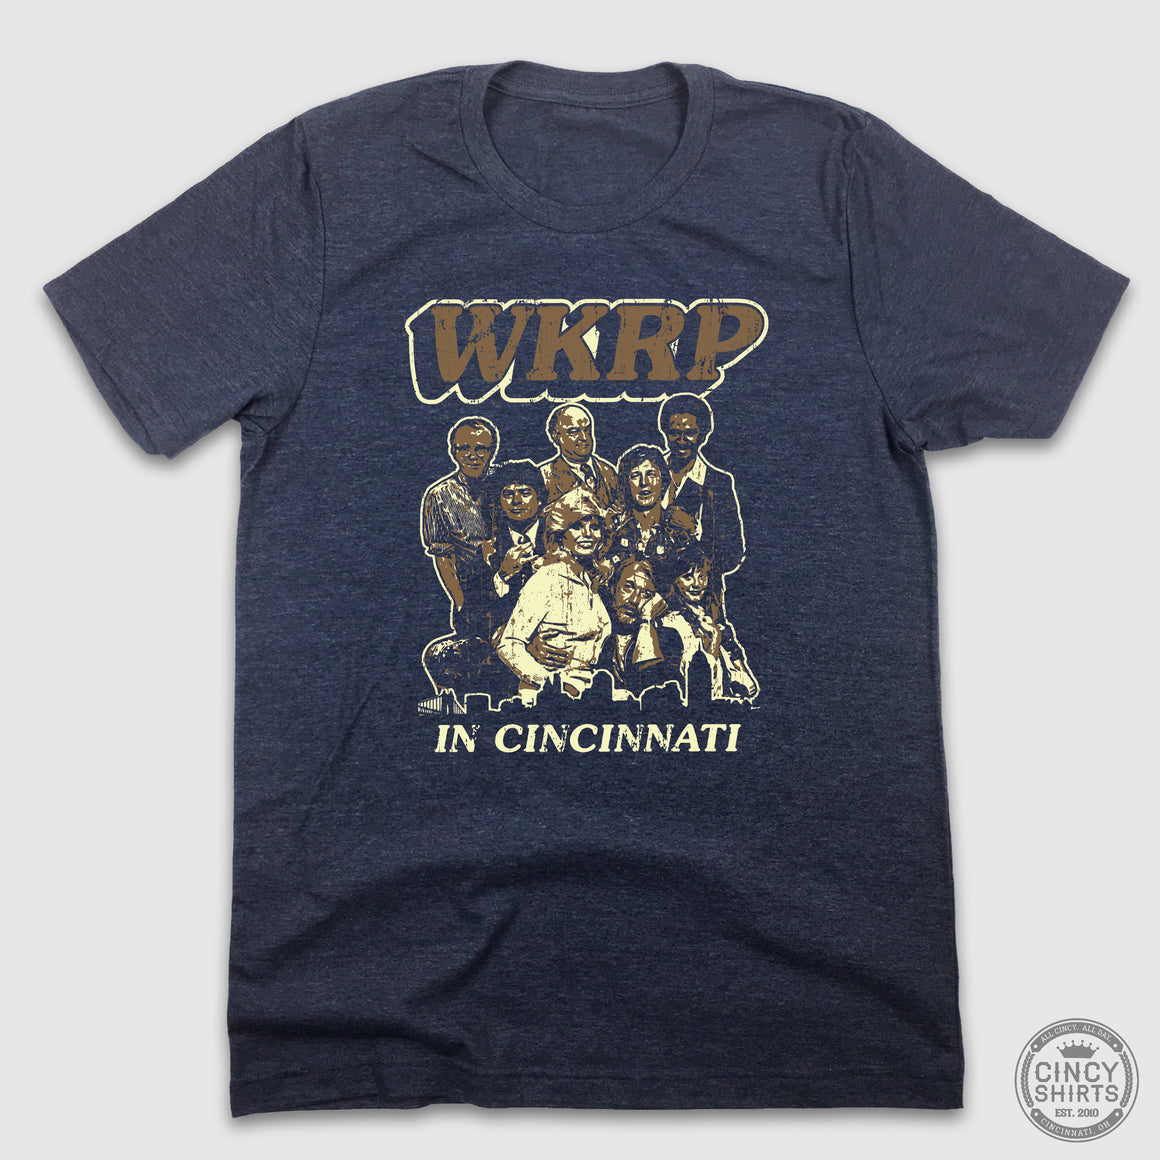 WKRP in Cincinnati Cast - Cincy Shirts